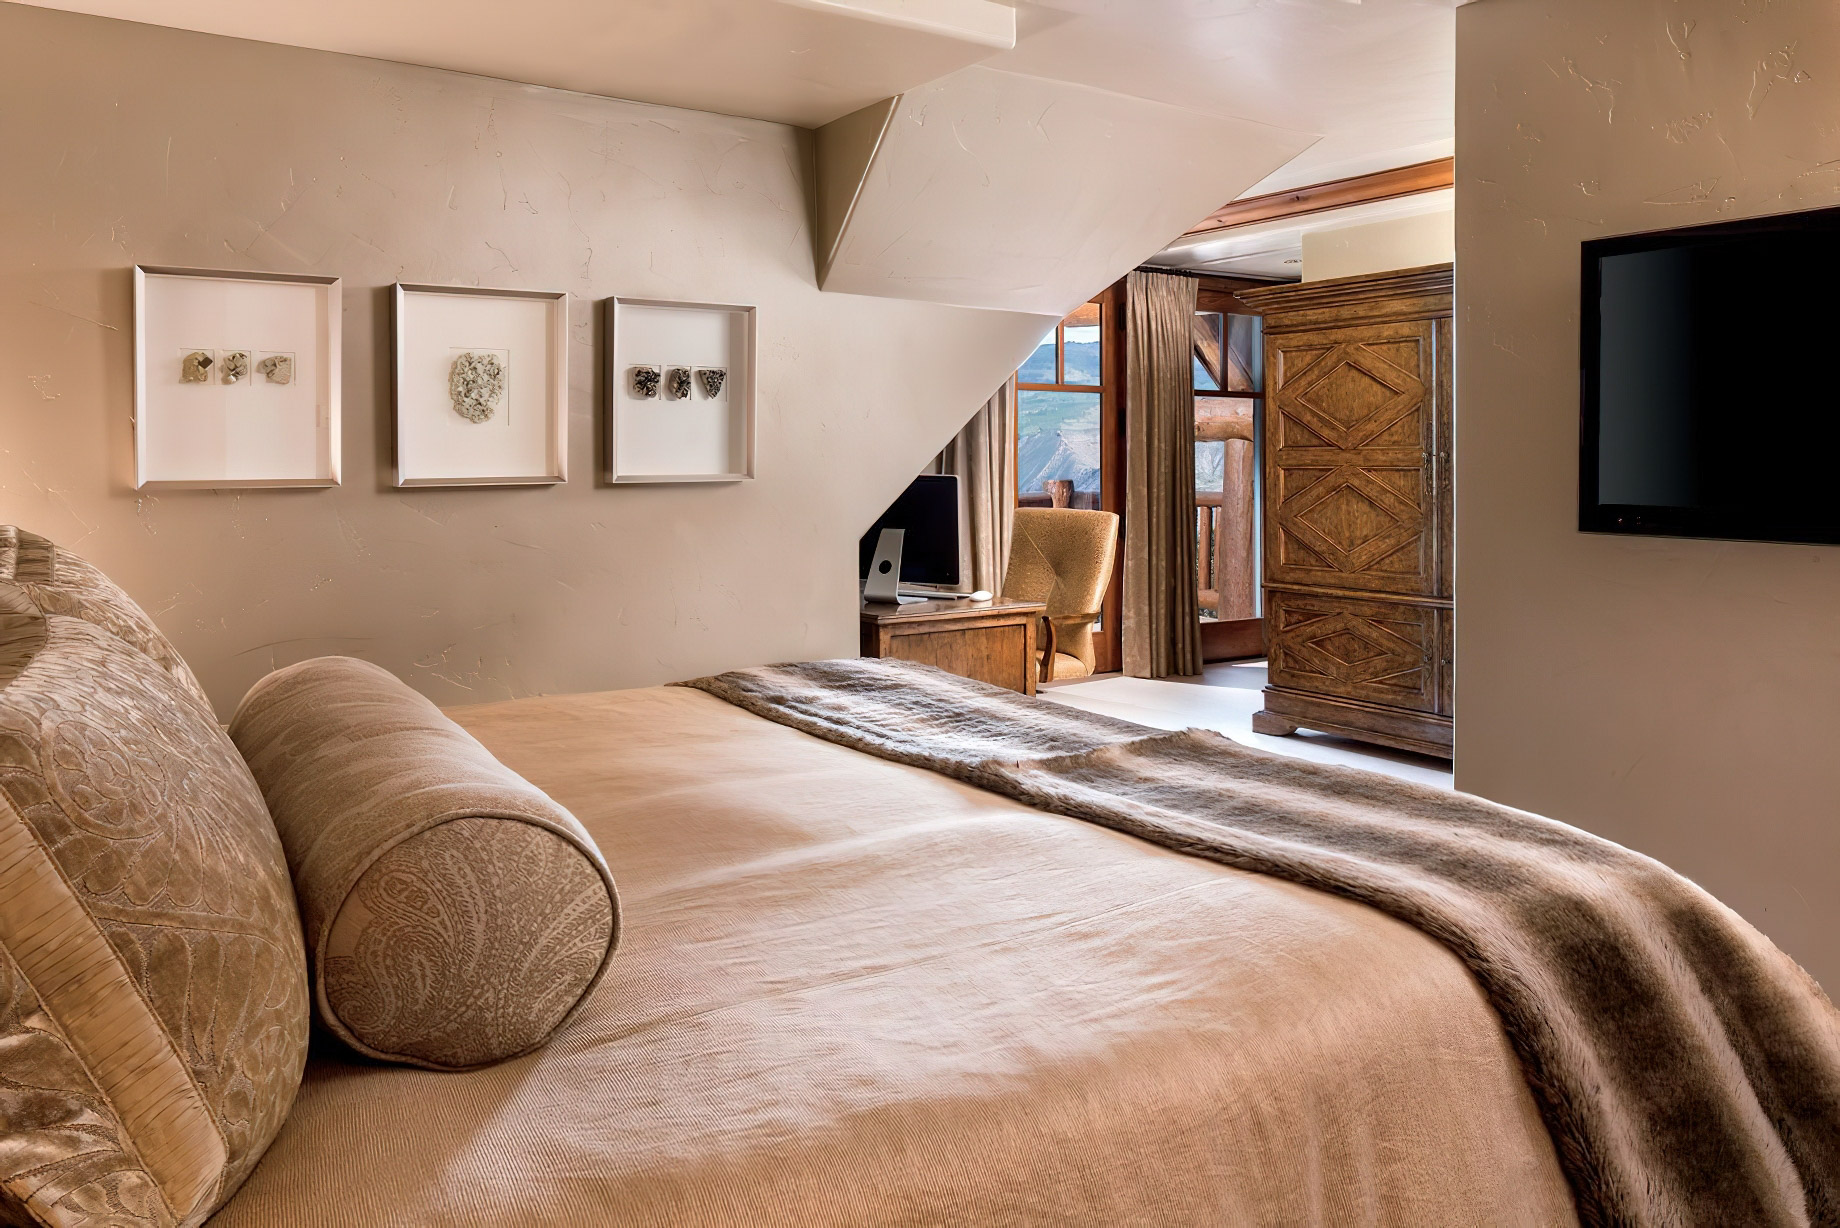 The Ritz-Carlton, Bachelor Gulch Resort - Avon, CO, USA - Three Bedroom Penthouse Bedroom Interior